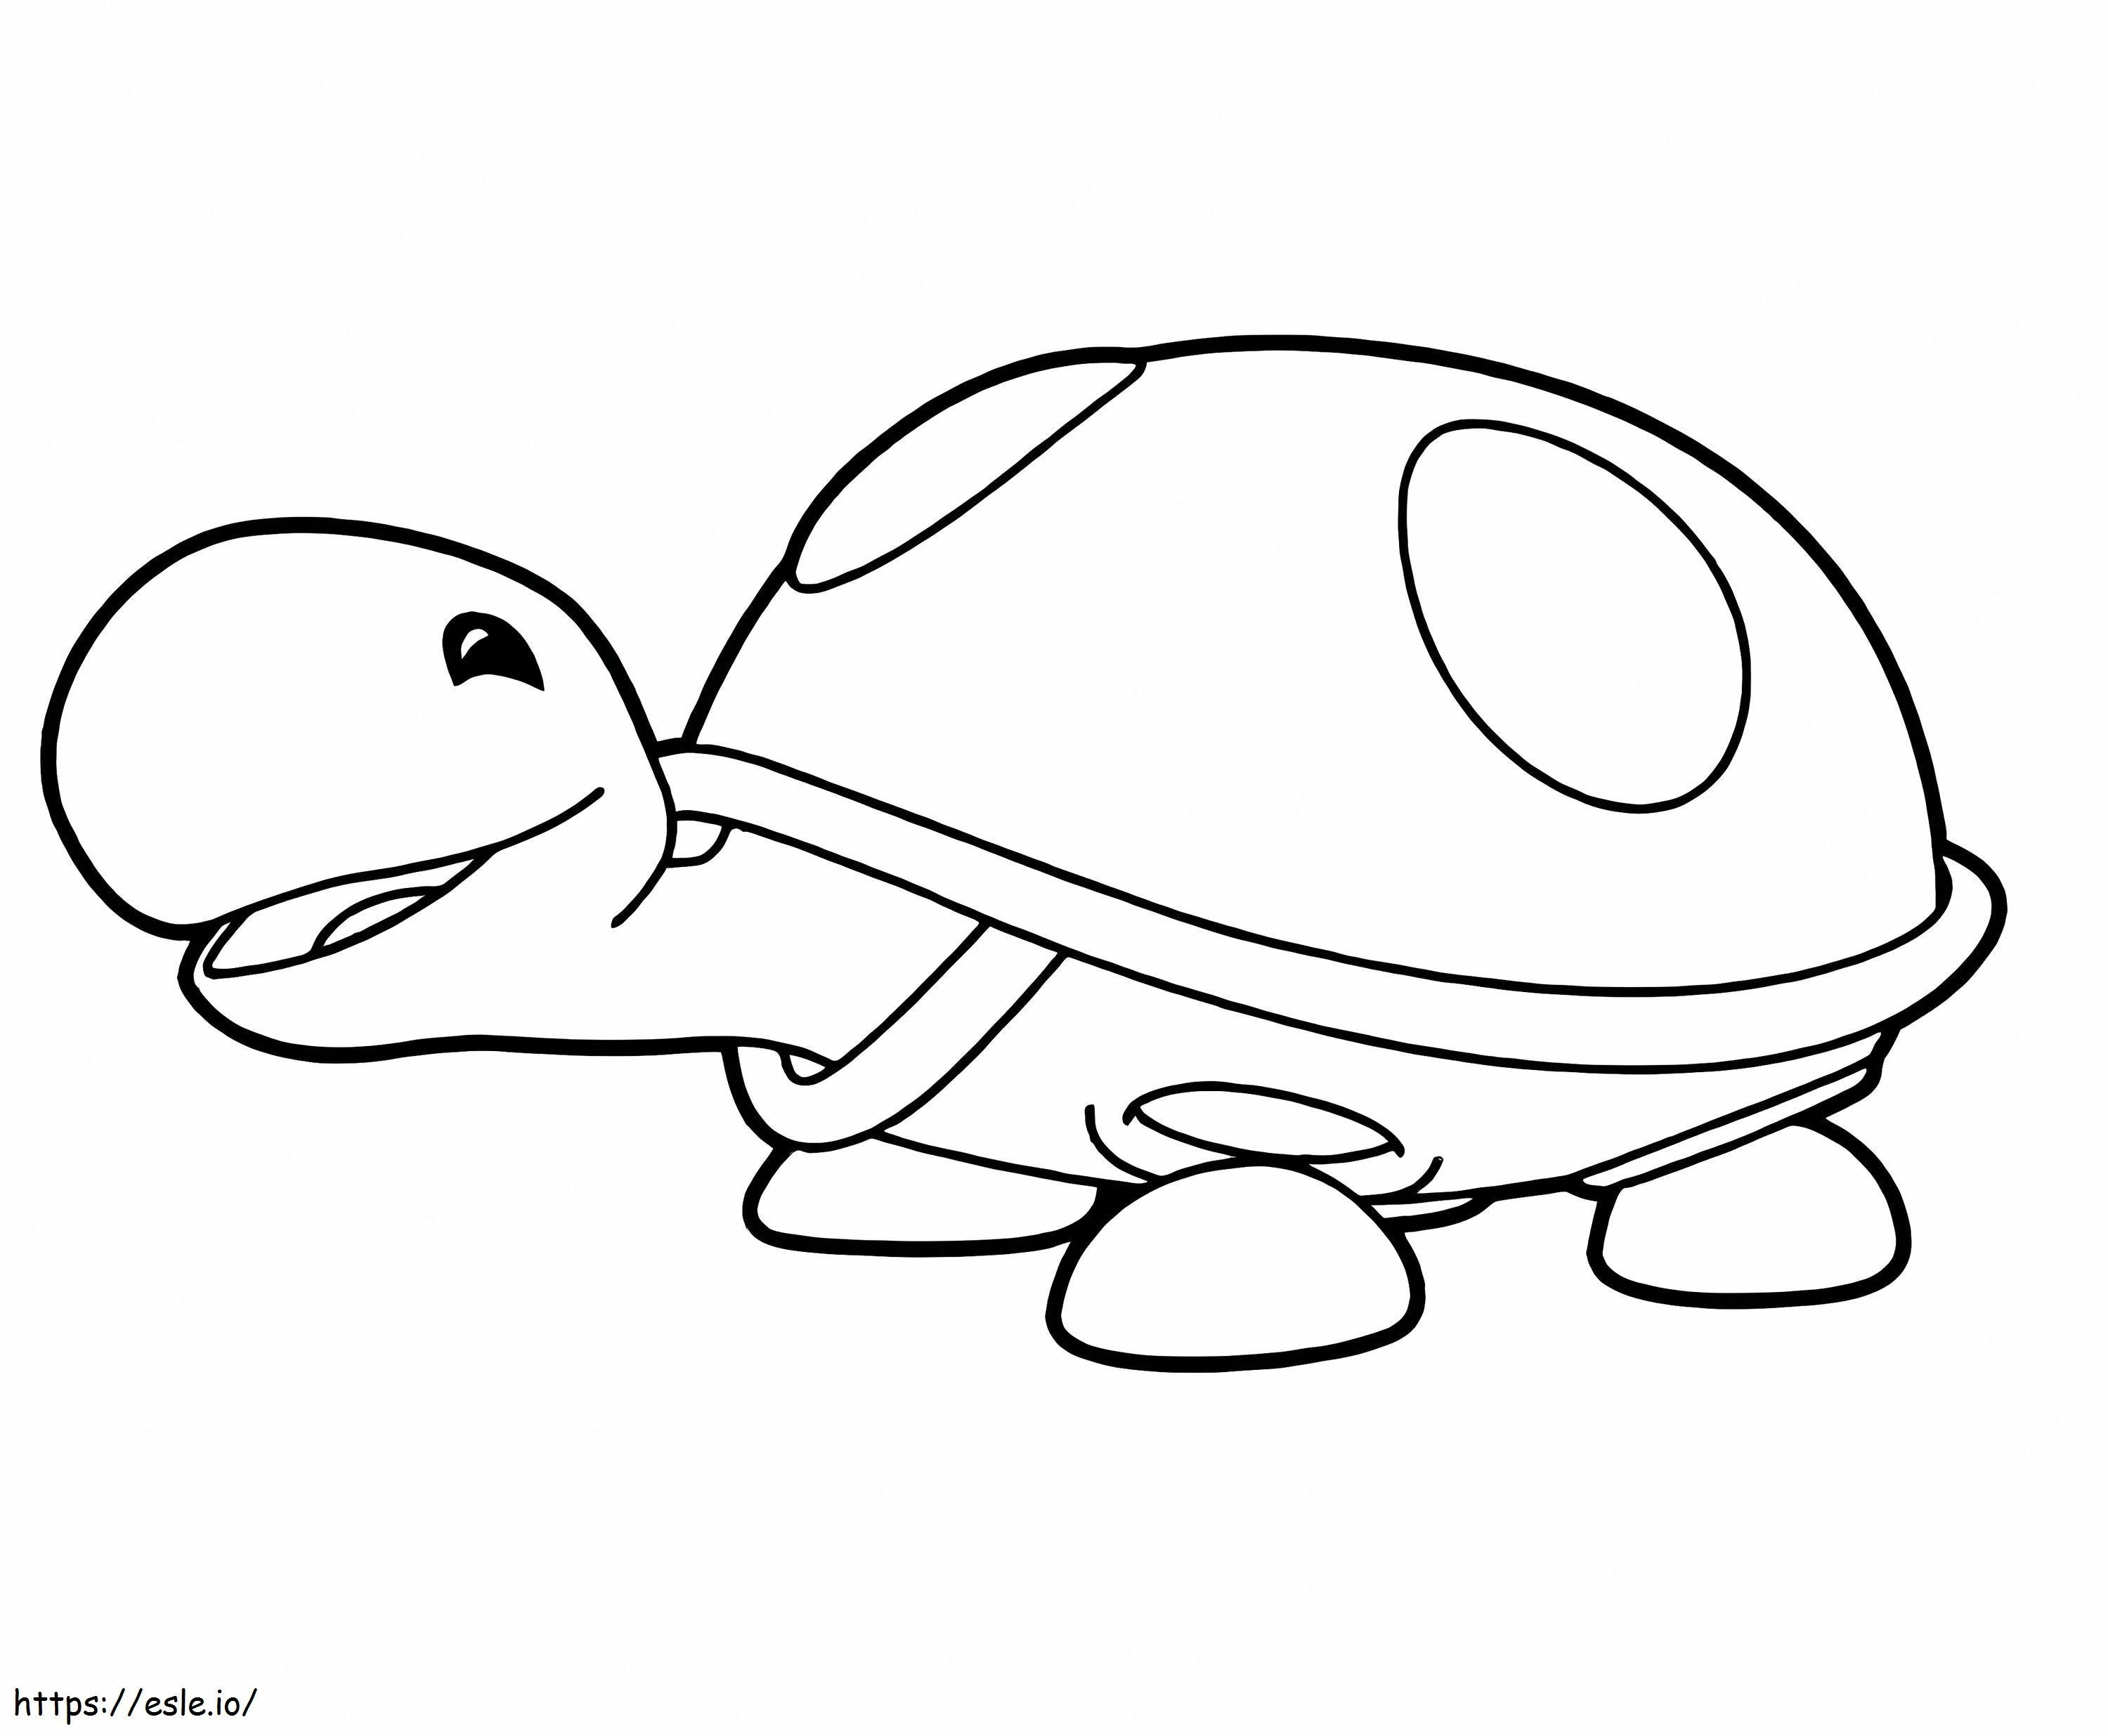 Tartaruga de Uki para colorir